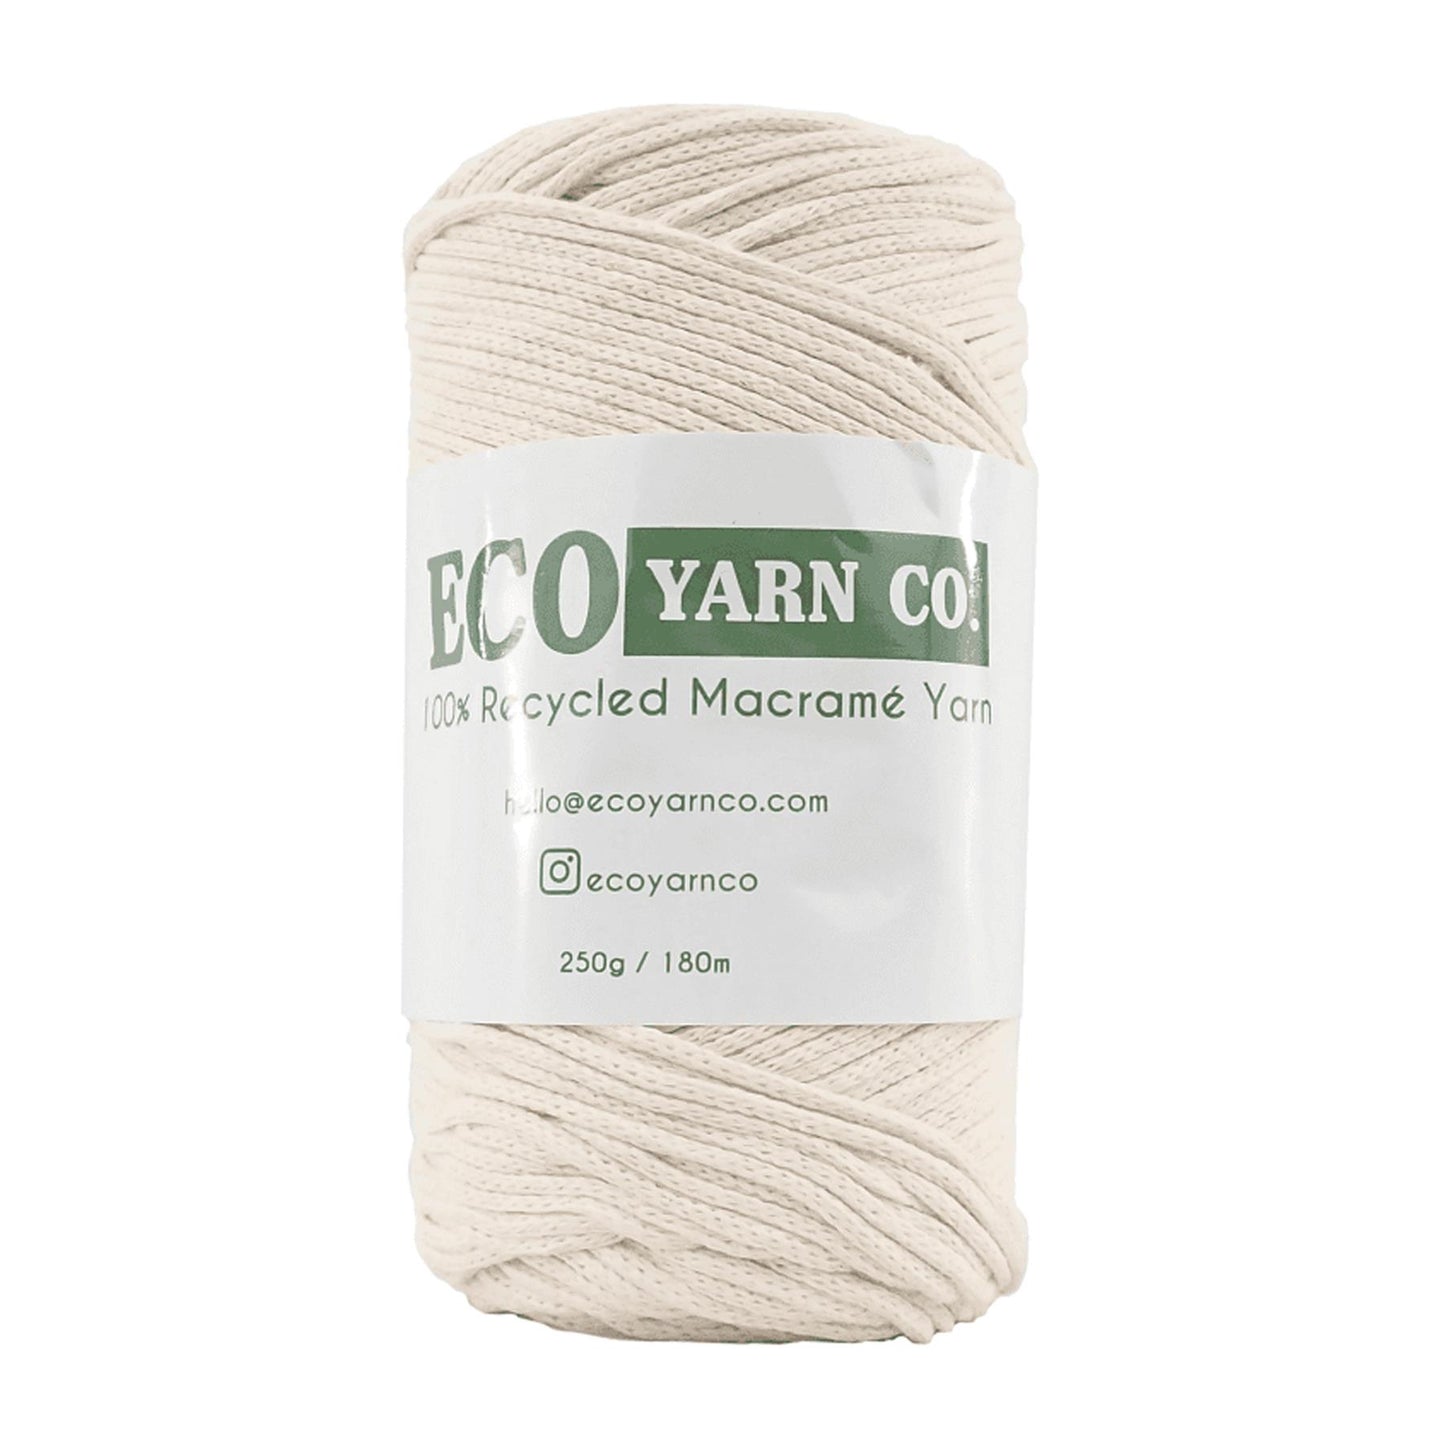 [Eco Yarn Co] Cream Cotton/Polyester Macrame Yarn - 180M, 250g